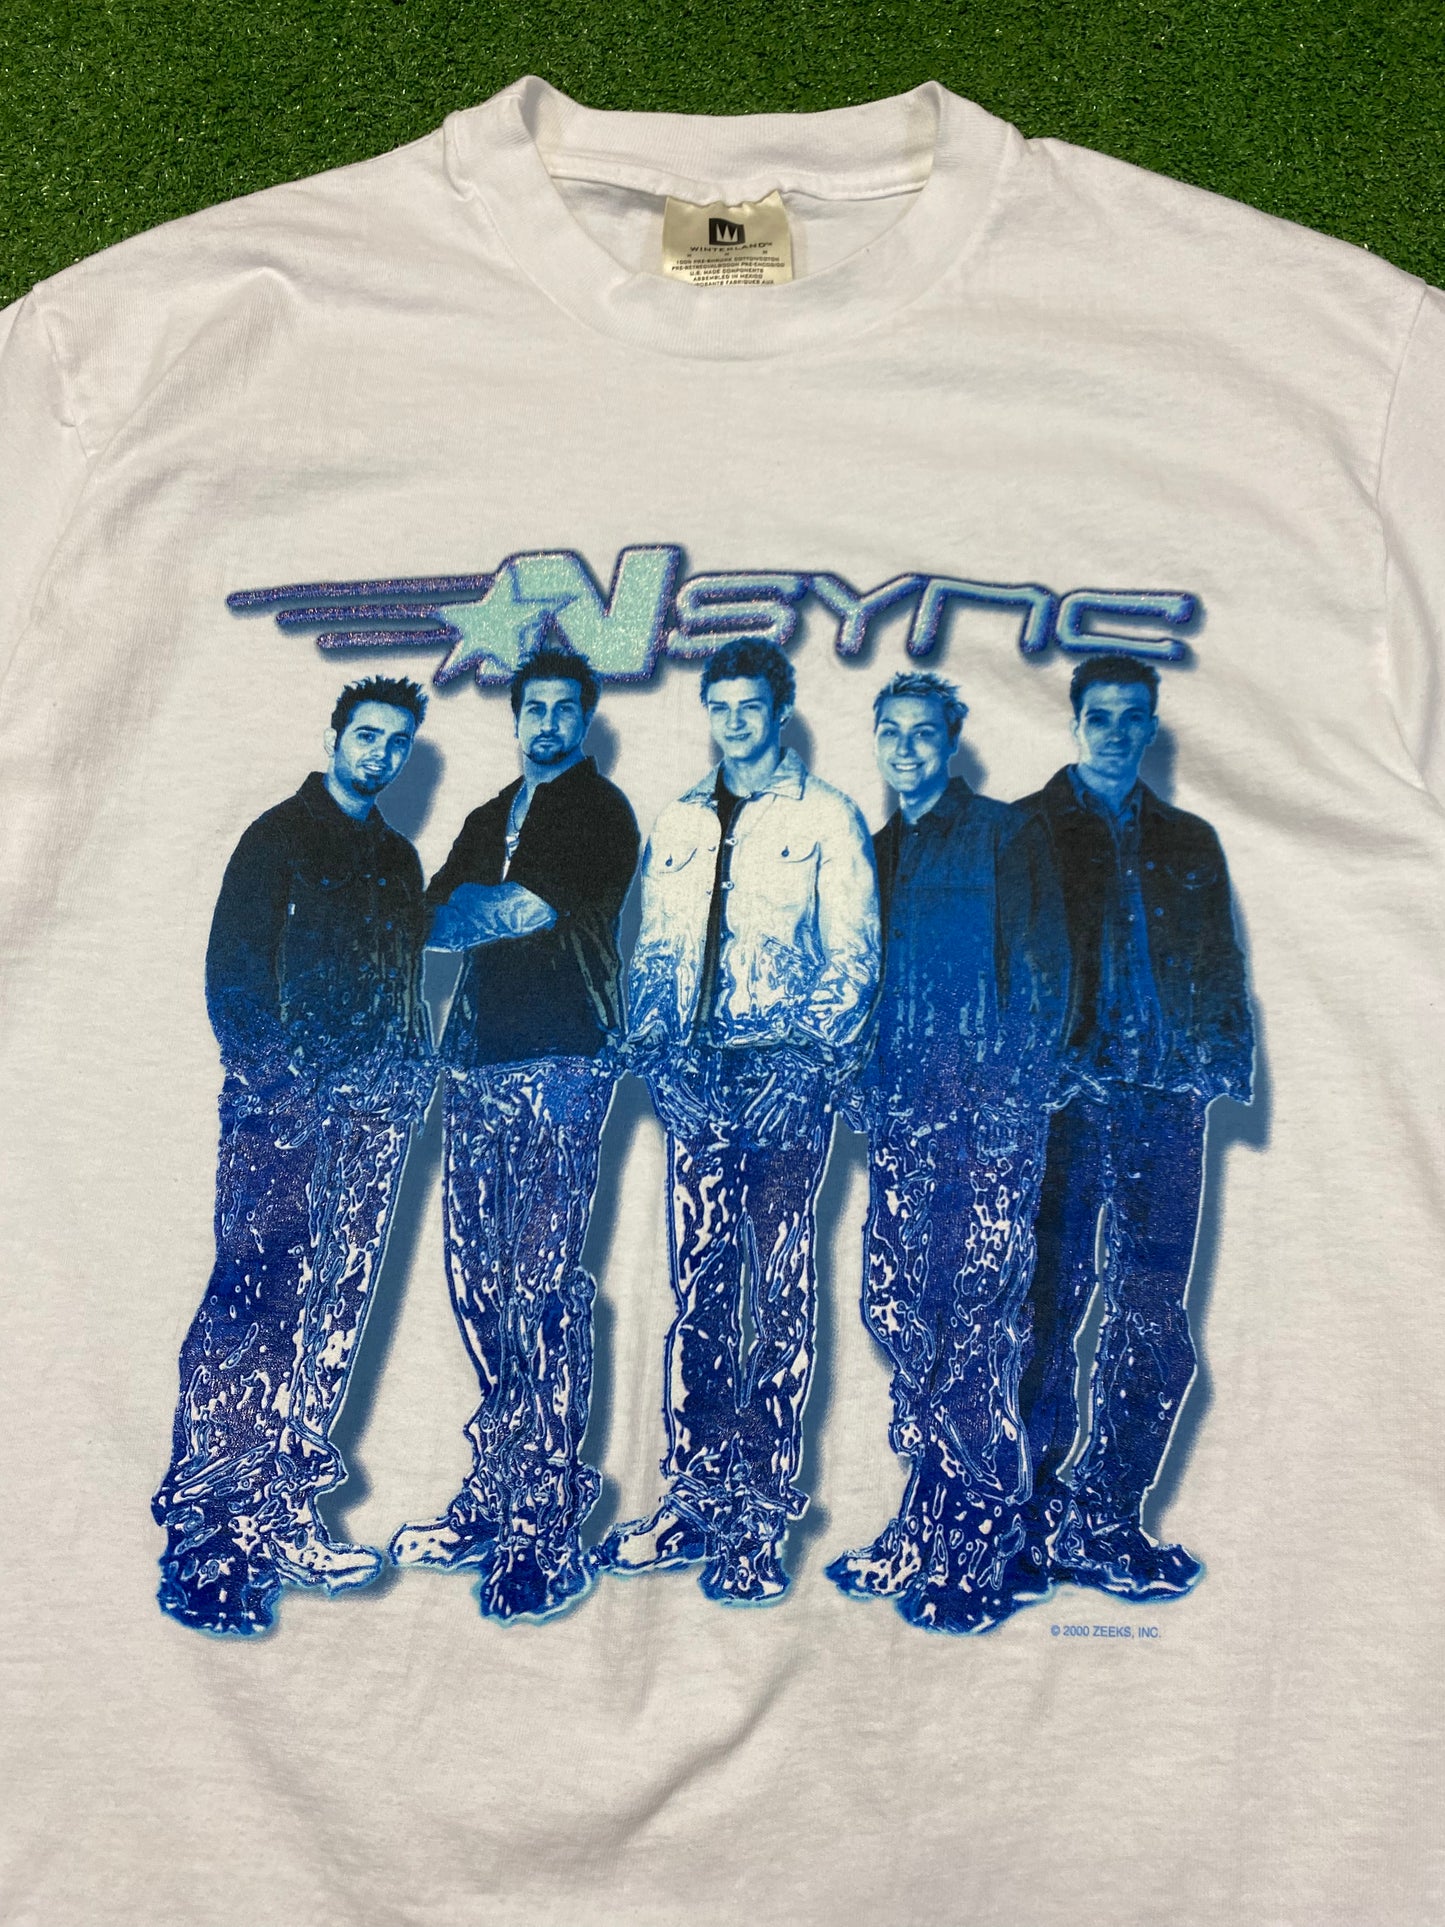 2000 NSYNC Winterland Band T-Shirt